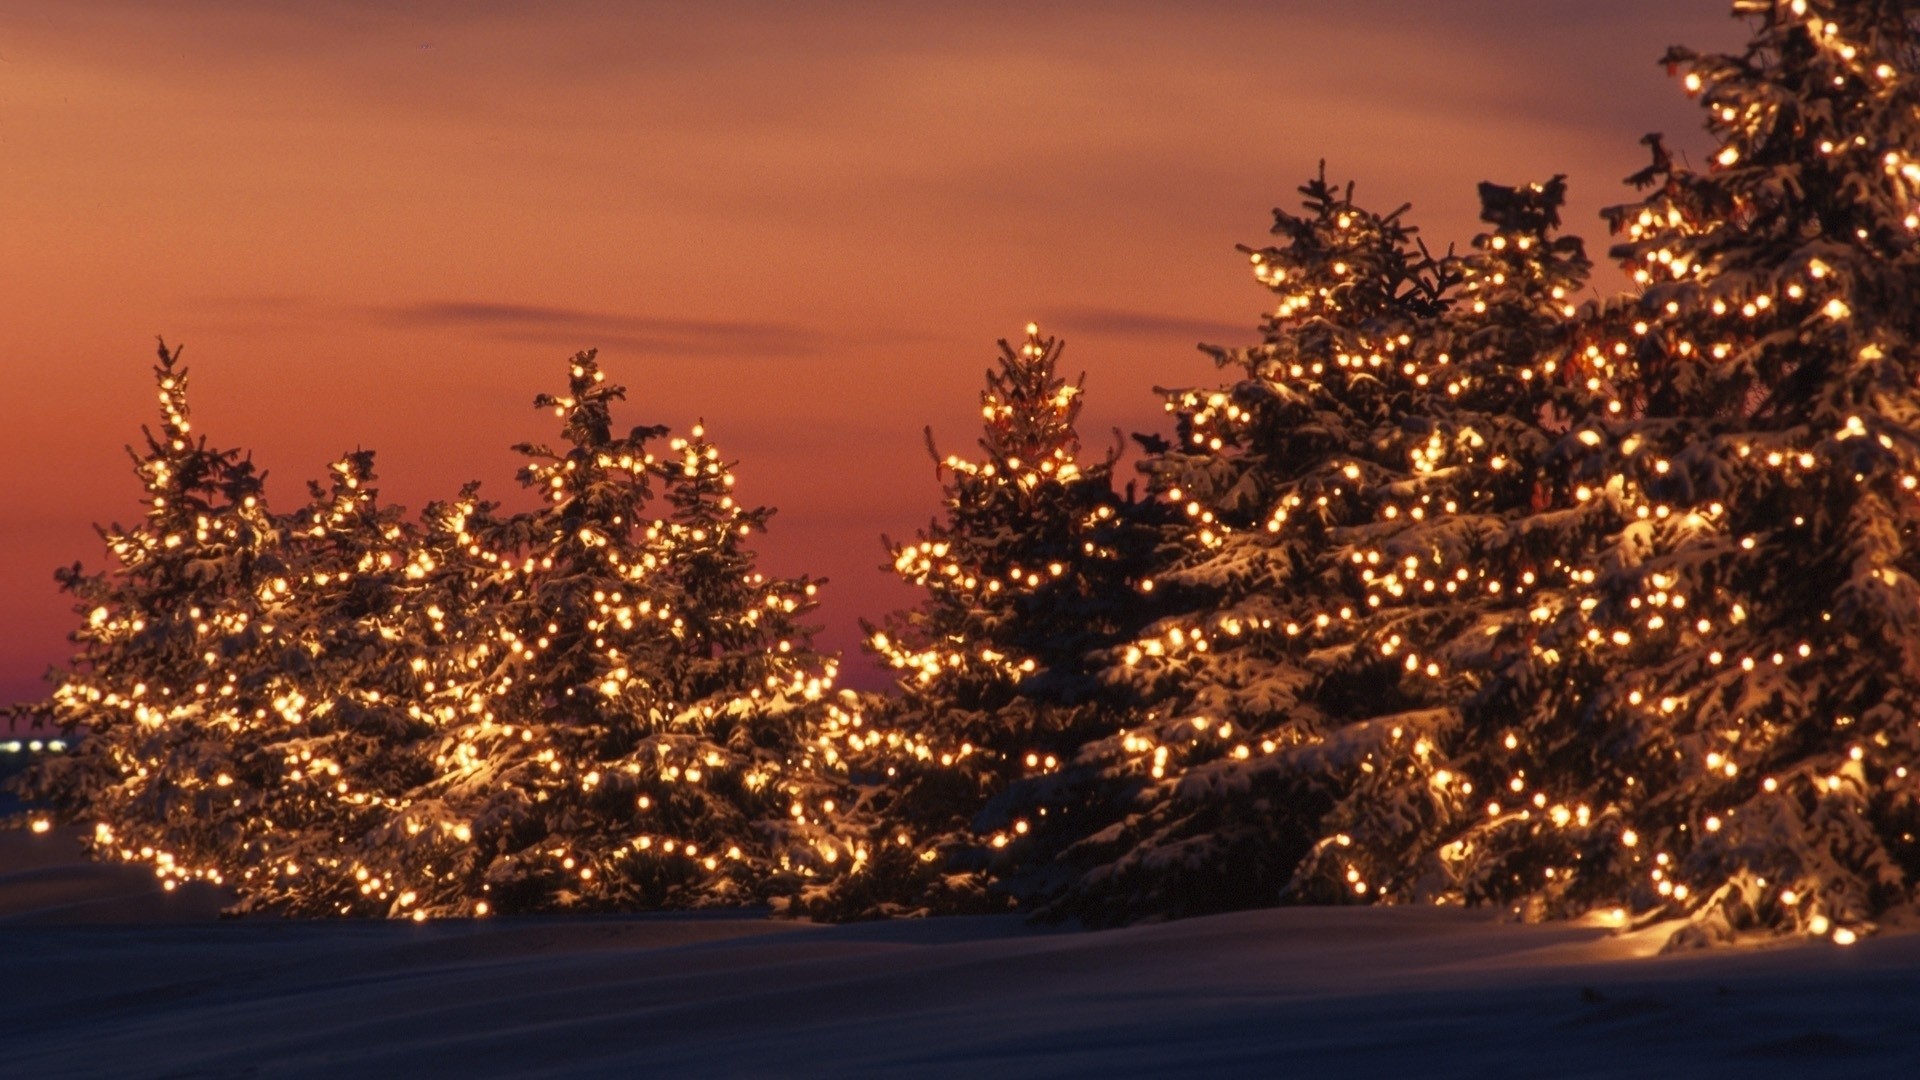 1920x1080 Title : free desktop christmas lights wallpapers winter. – media file.  Dimension : 1920 x 1080. File Type : JPG/JPEG